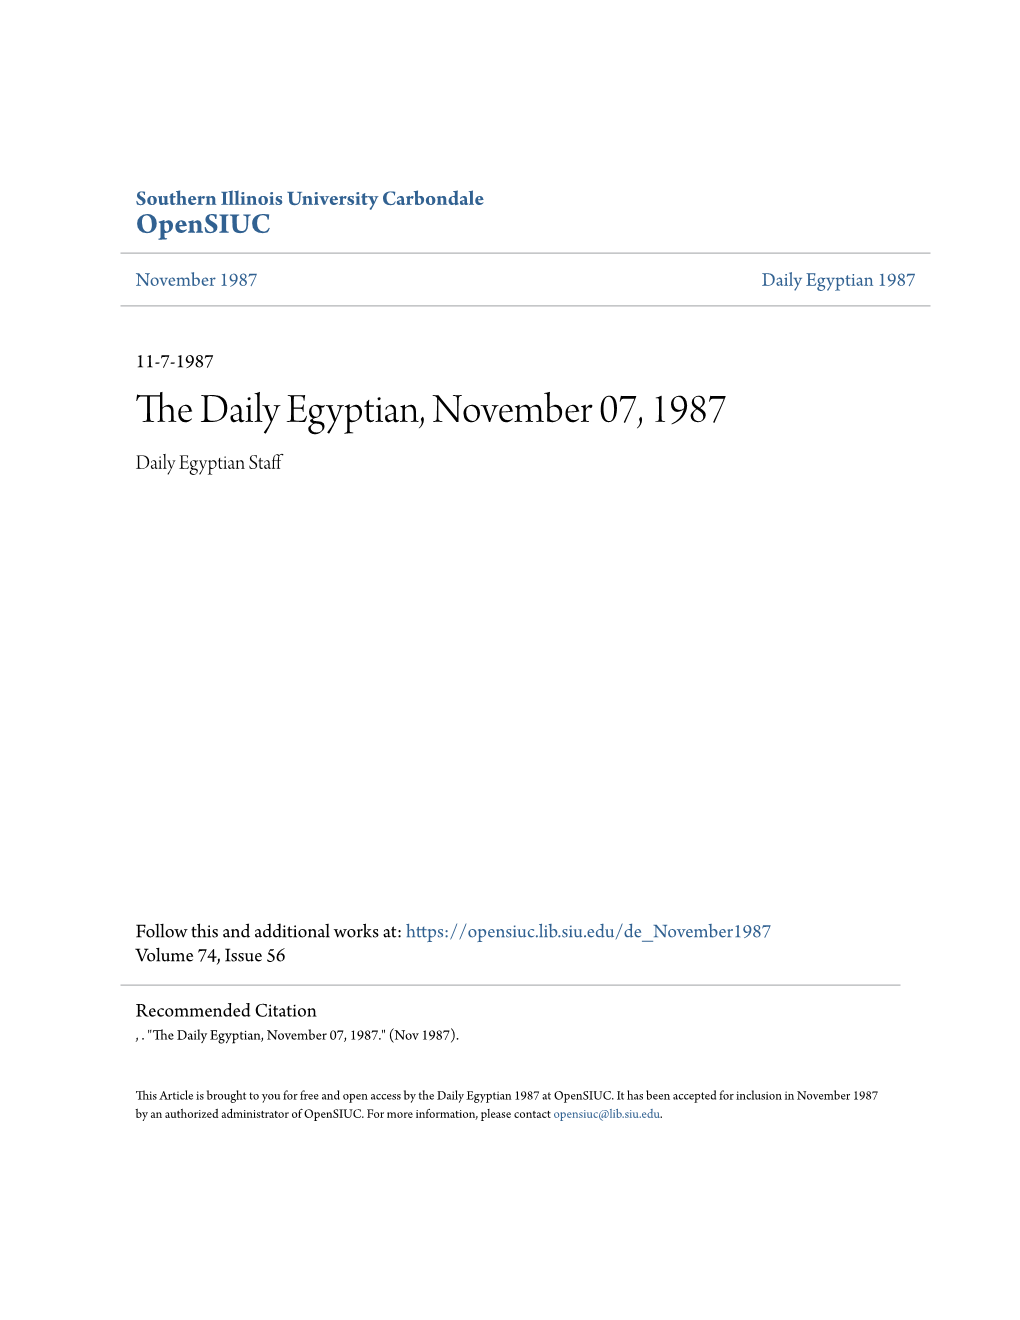 The Daily Egyptian, November 07, 1987